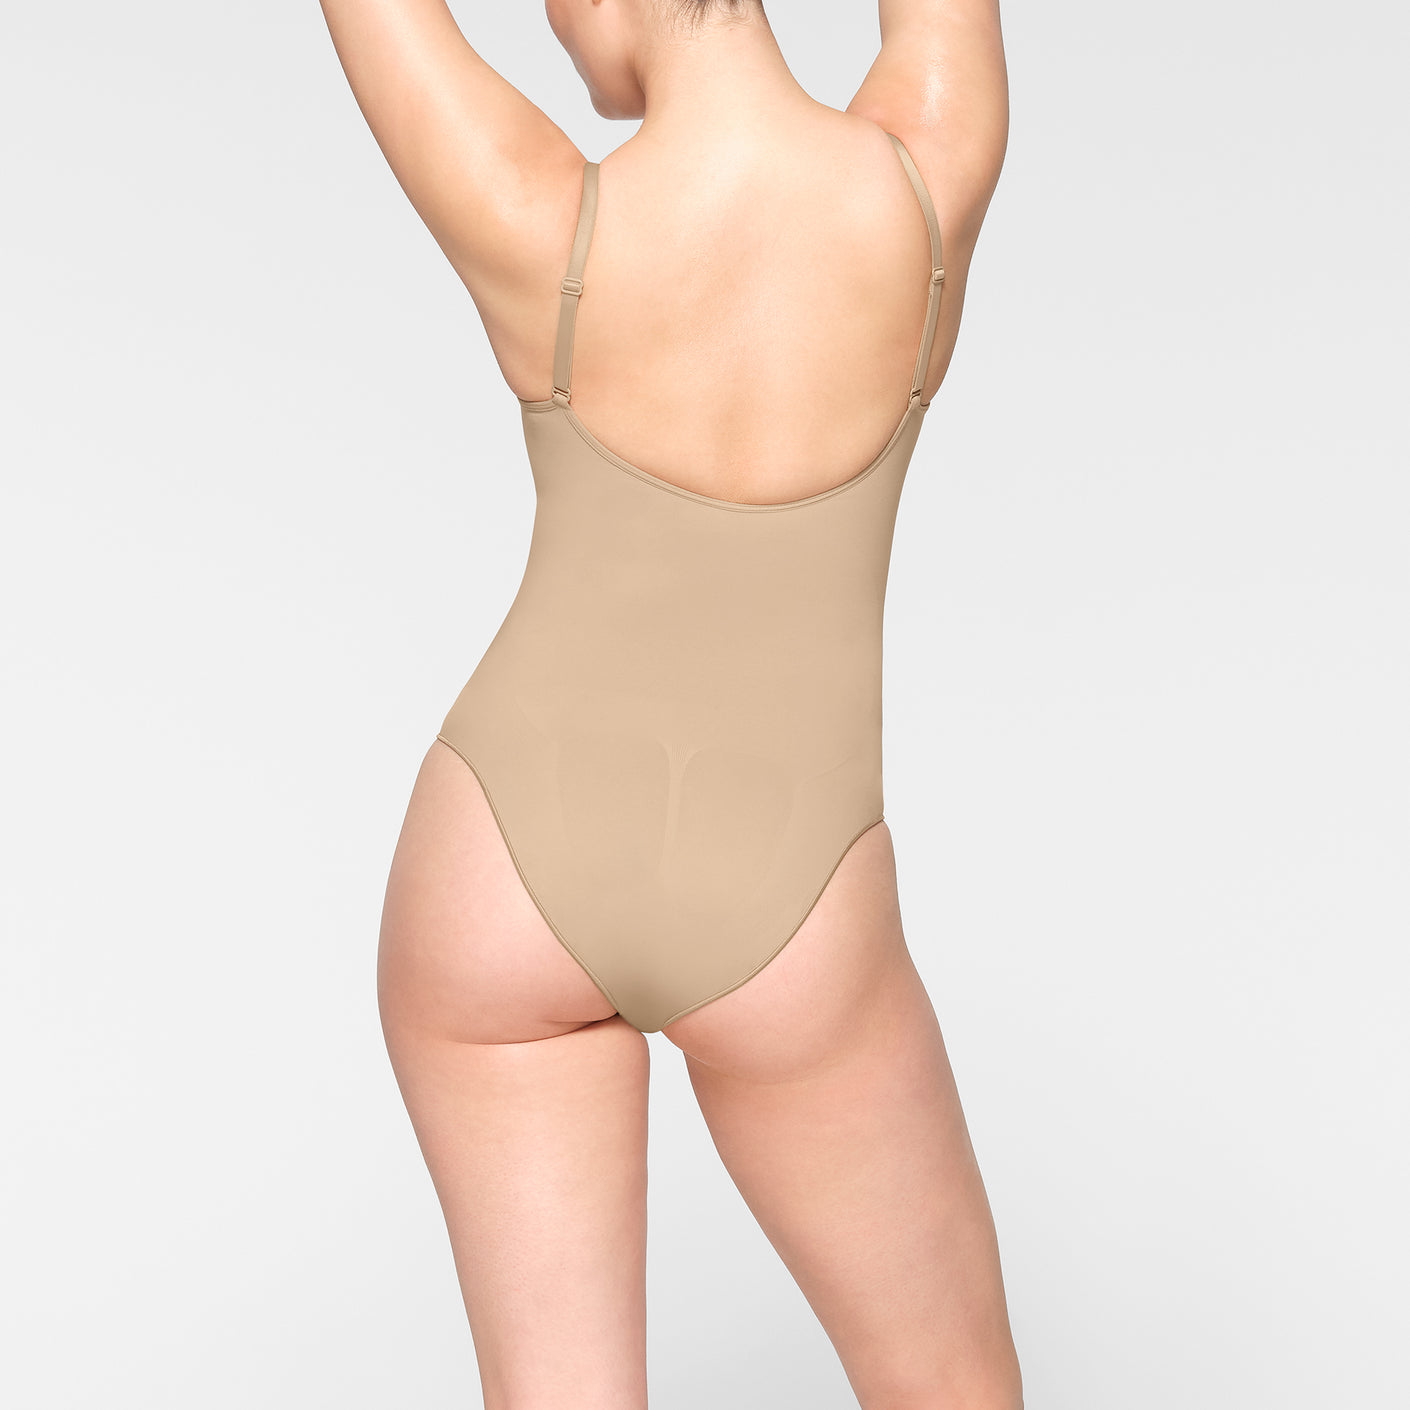 ZYDNFE Belly Tightener Seamless Skims Sculpting Bodysuit Women